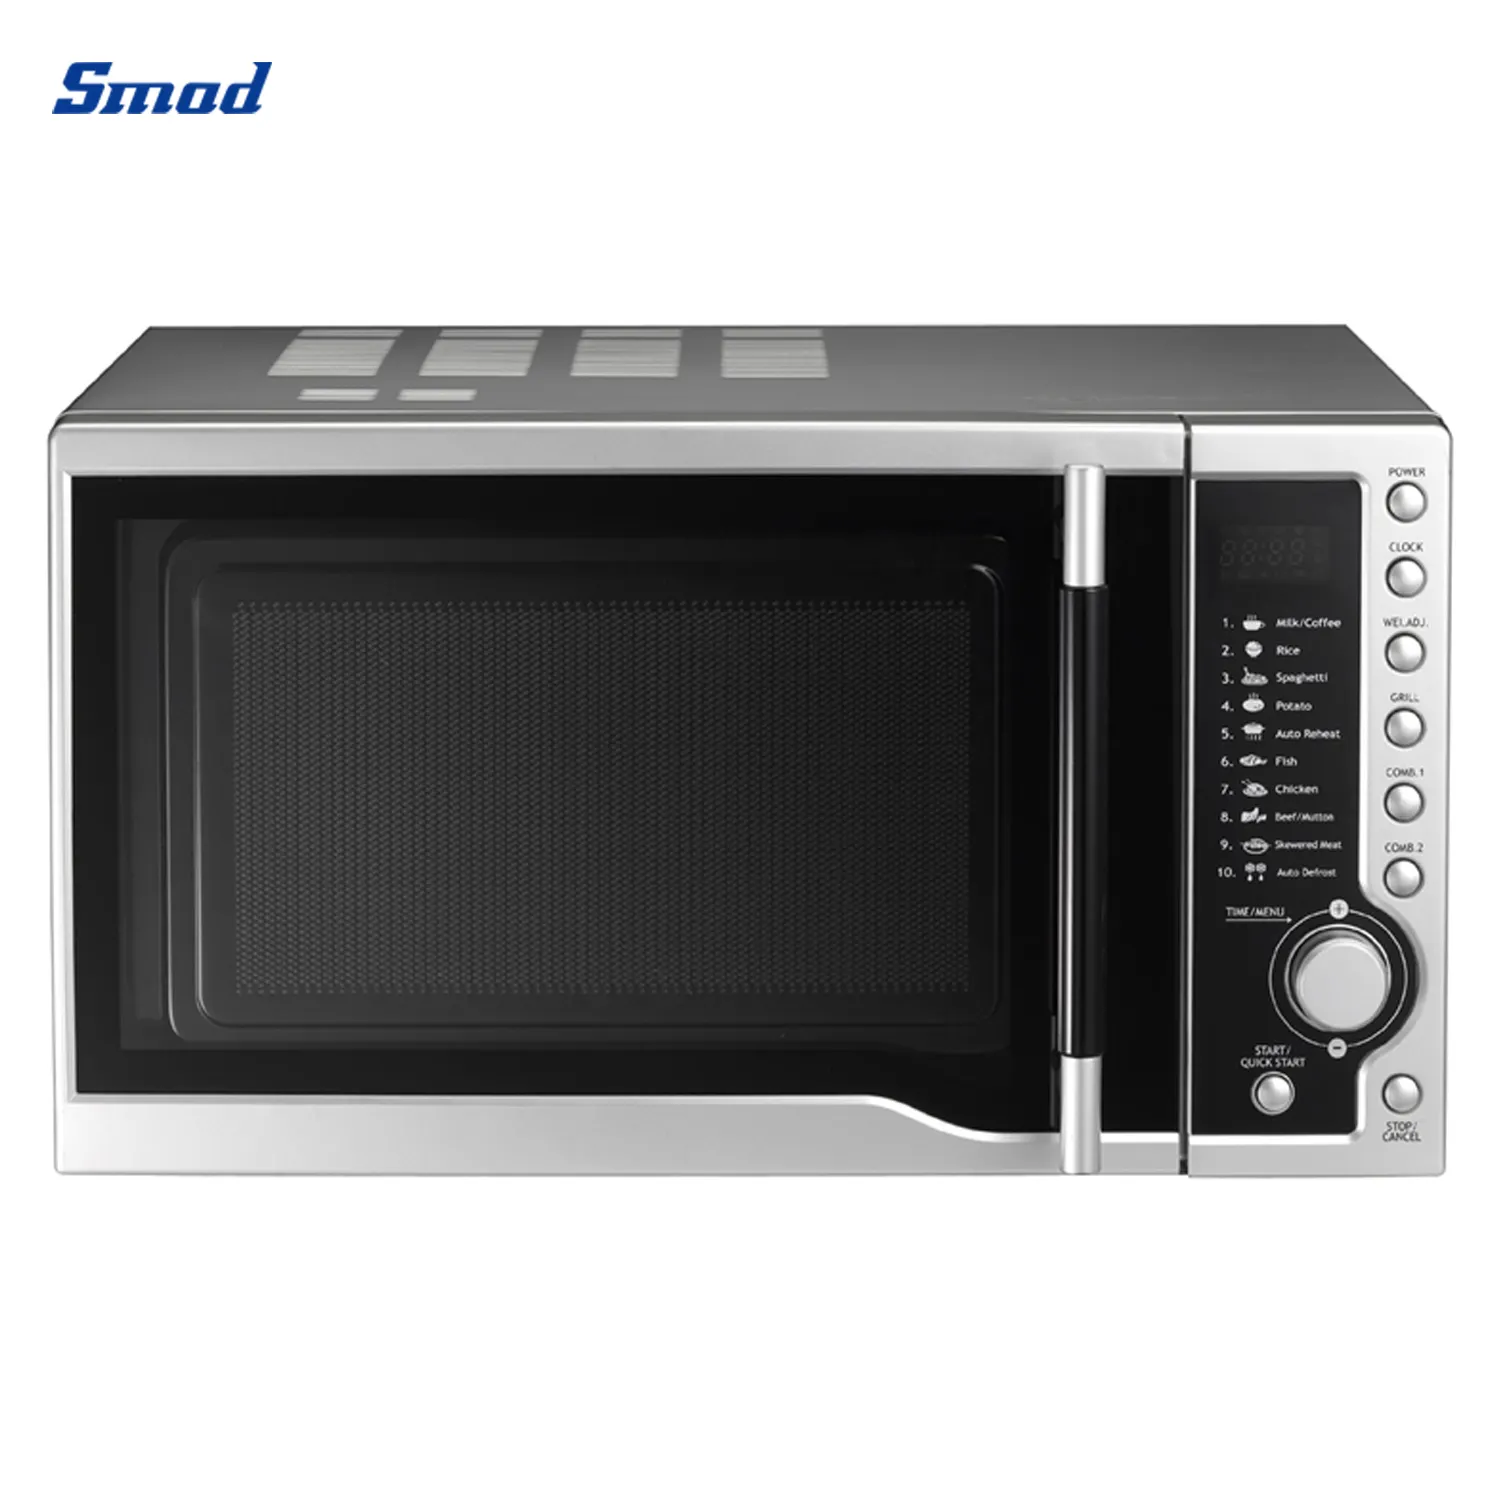 Oven Microwave Digital, Oven Microwave Digital Atas Meja Stainless Steel 110V 0.7 dengan Panggangan